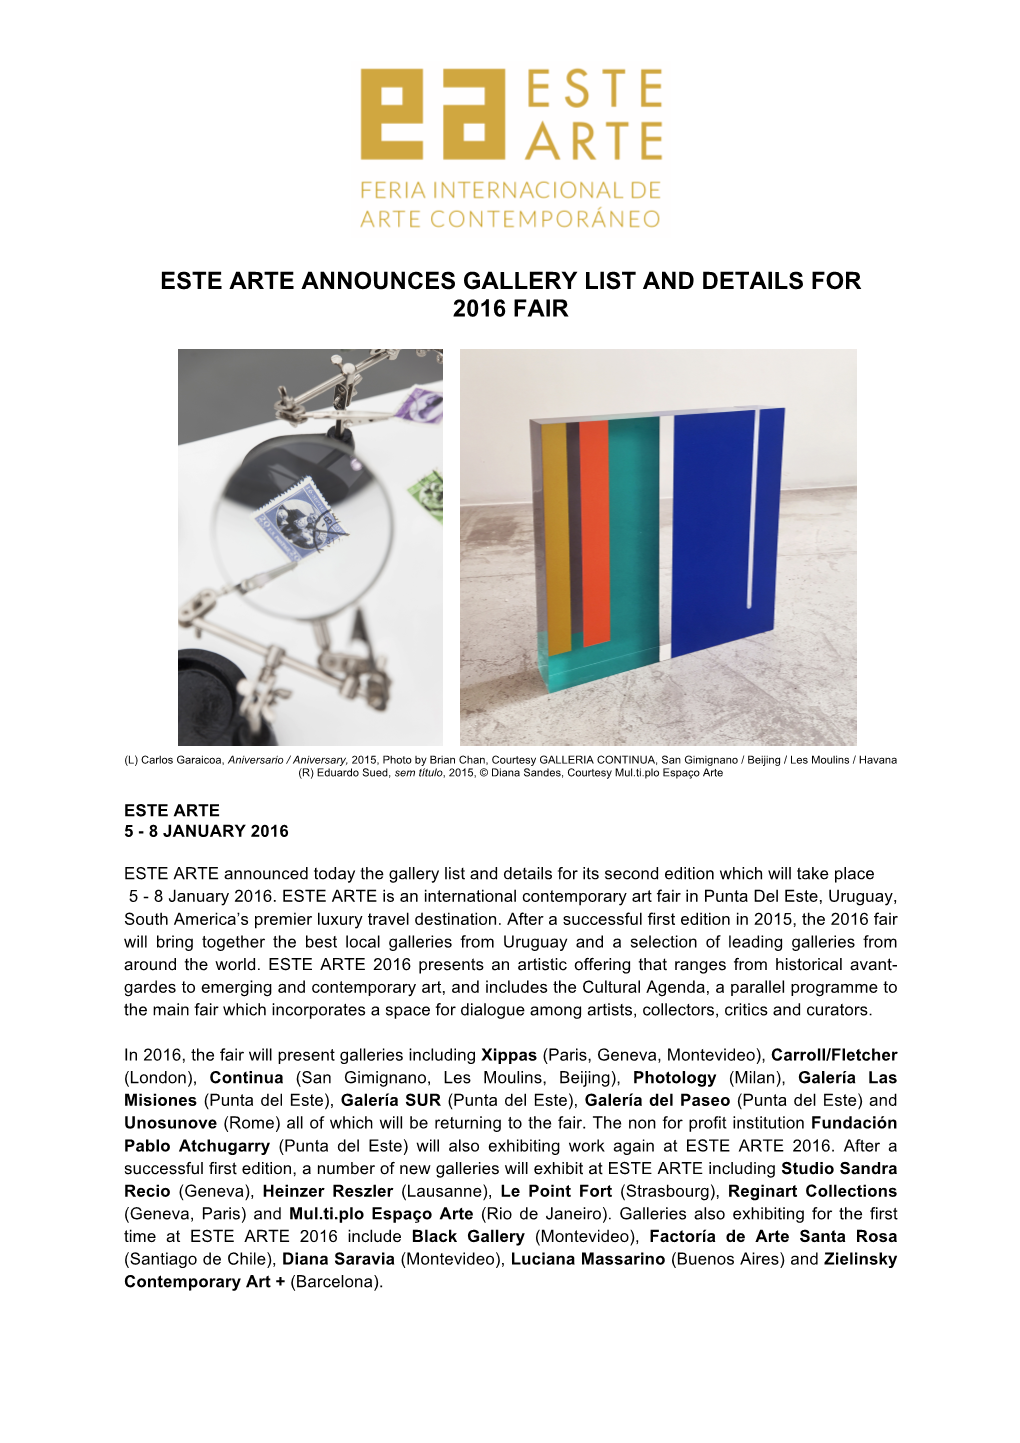 Este Arte Announces Gallery List and Details for 2016 Fair